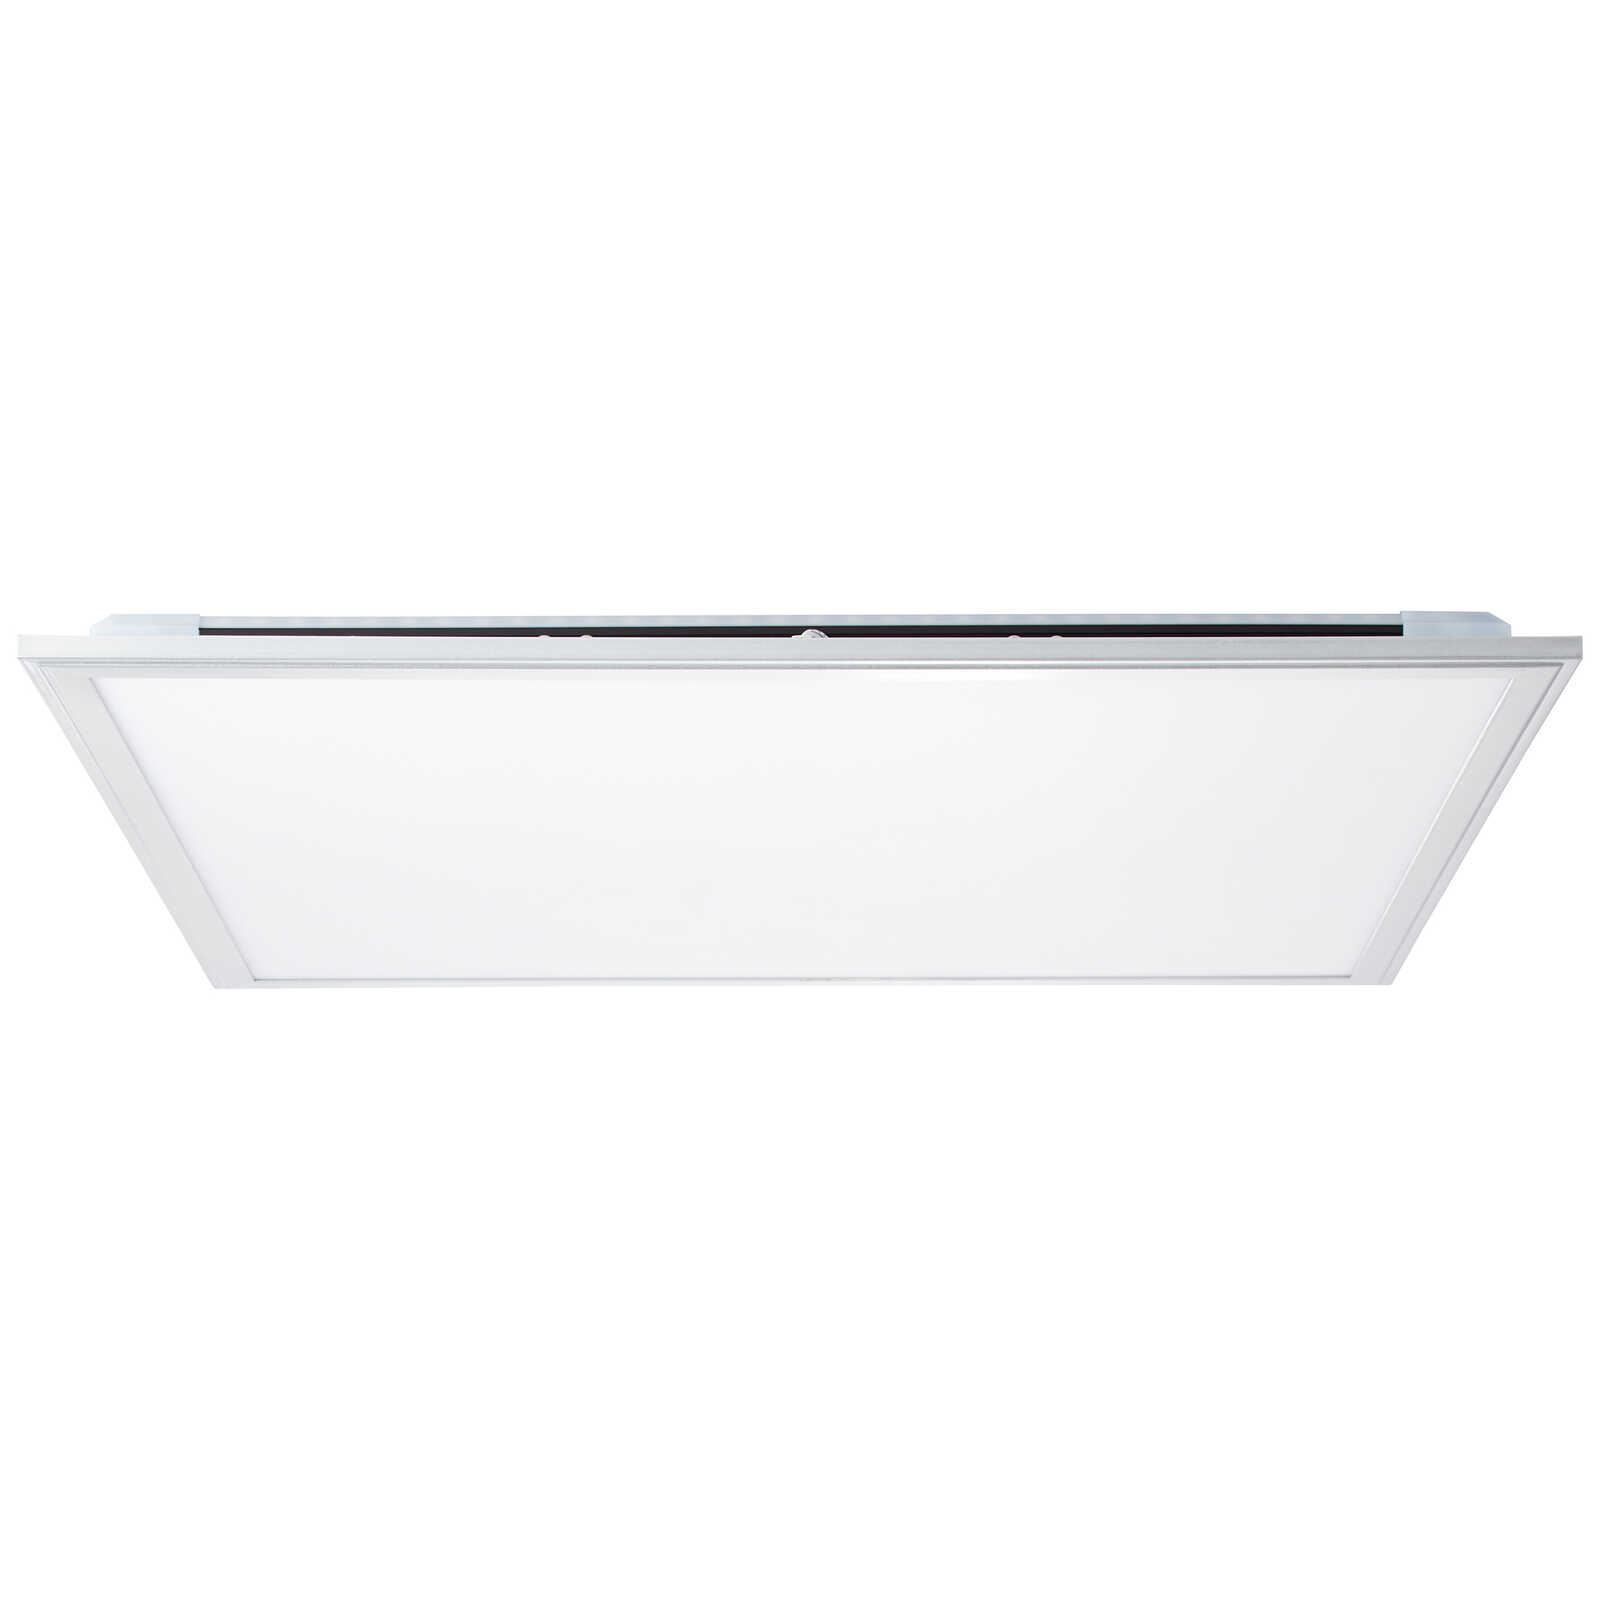             Metal ceiling light - Alba 2 - silver, white
        